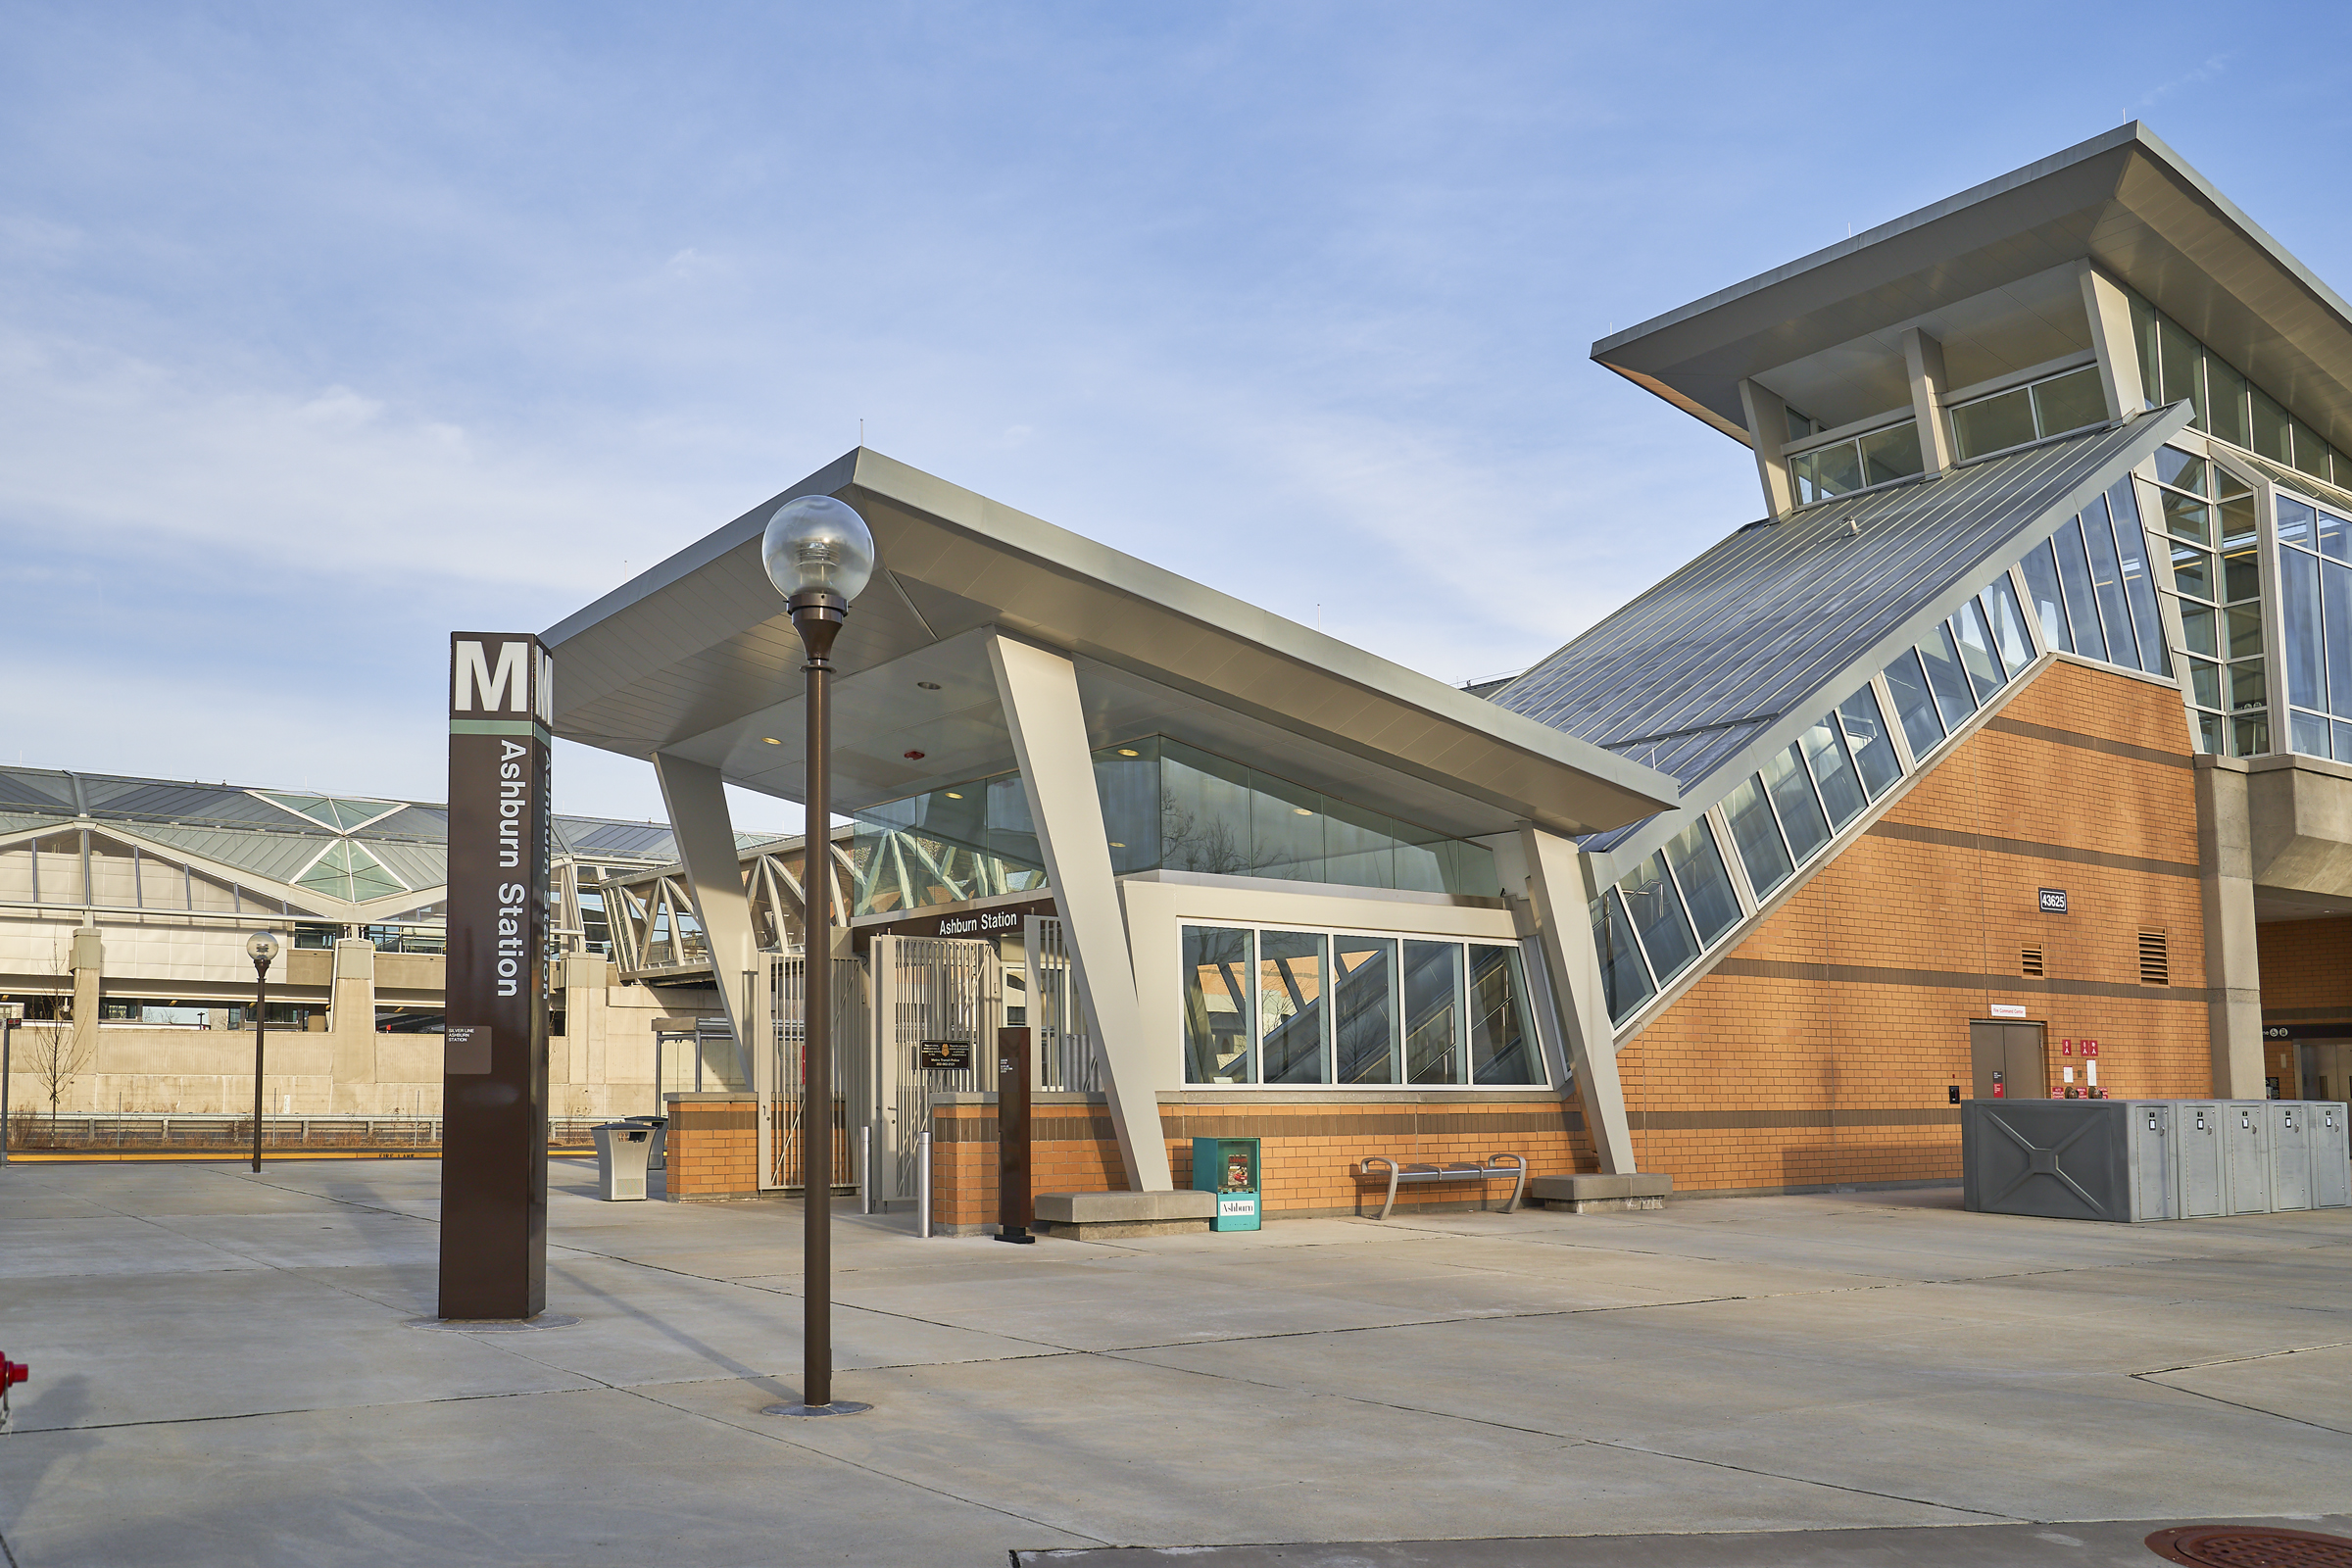 Professional exterior photo of the Ashburn Metro station, Ashburn Virginia